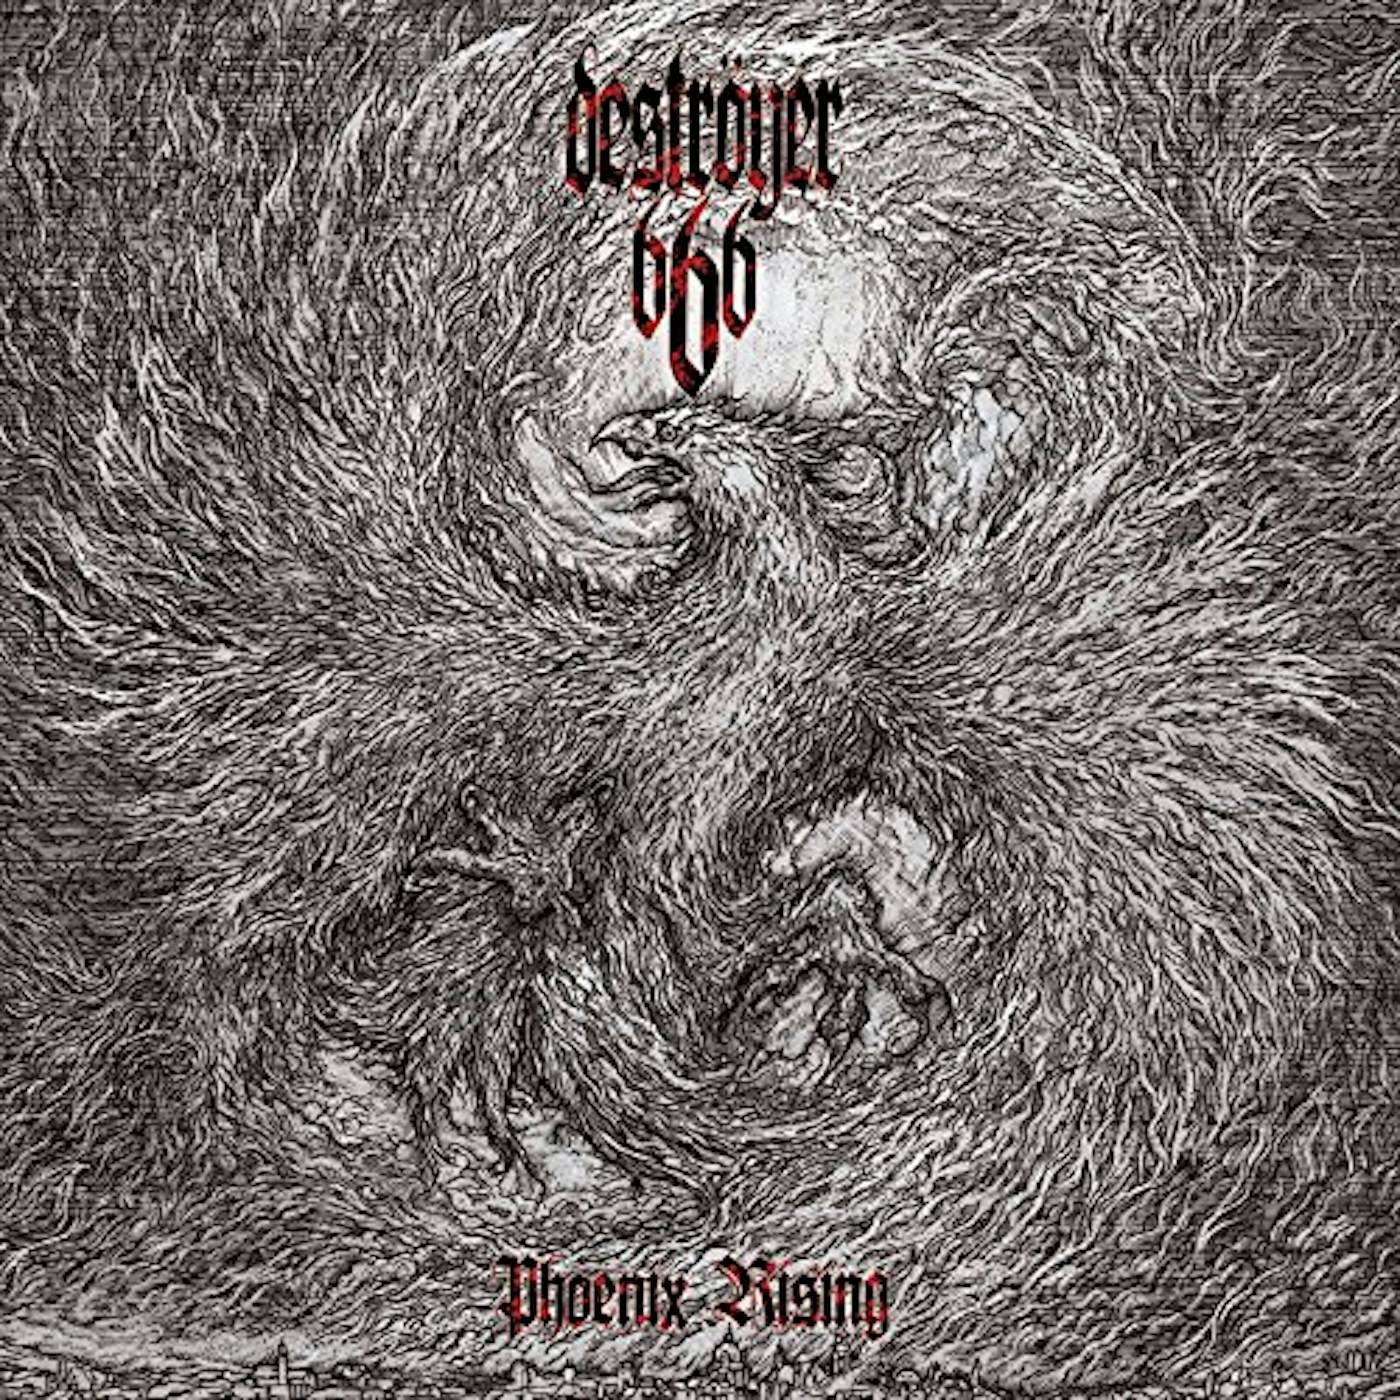 Deströyer 666 Phoenix Rising Vinyl Record